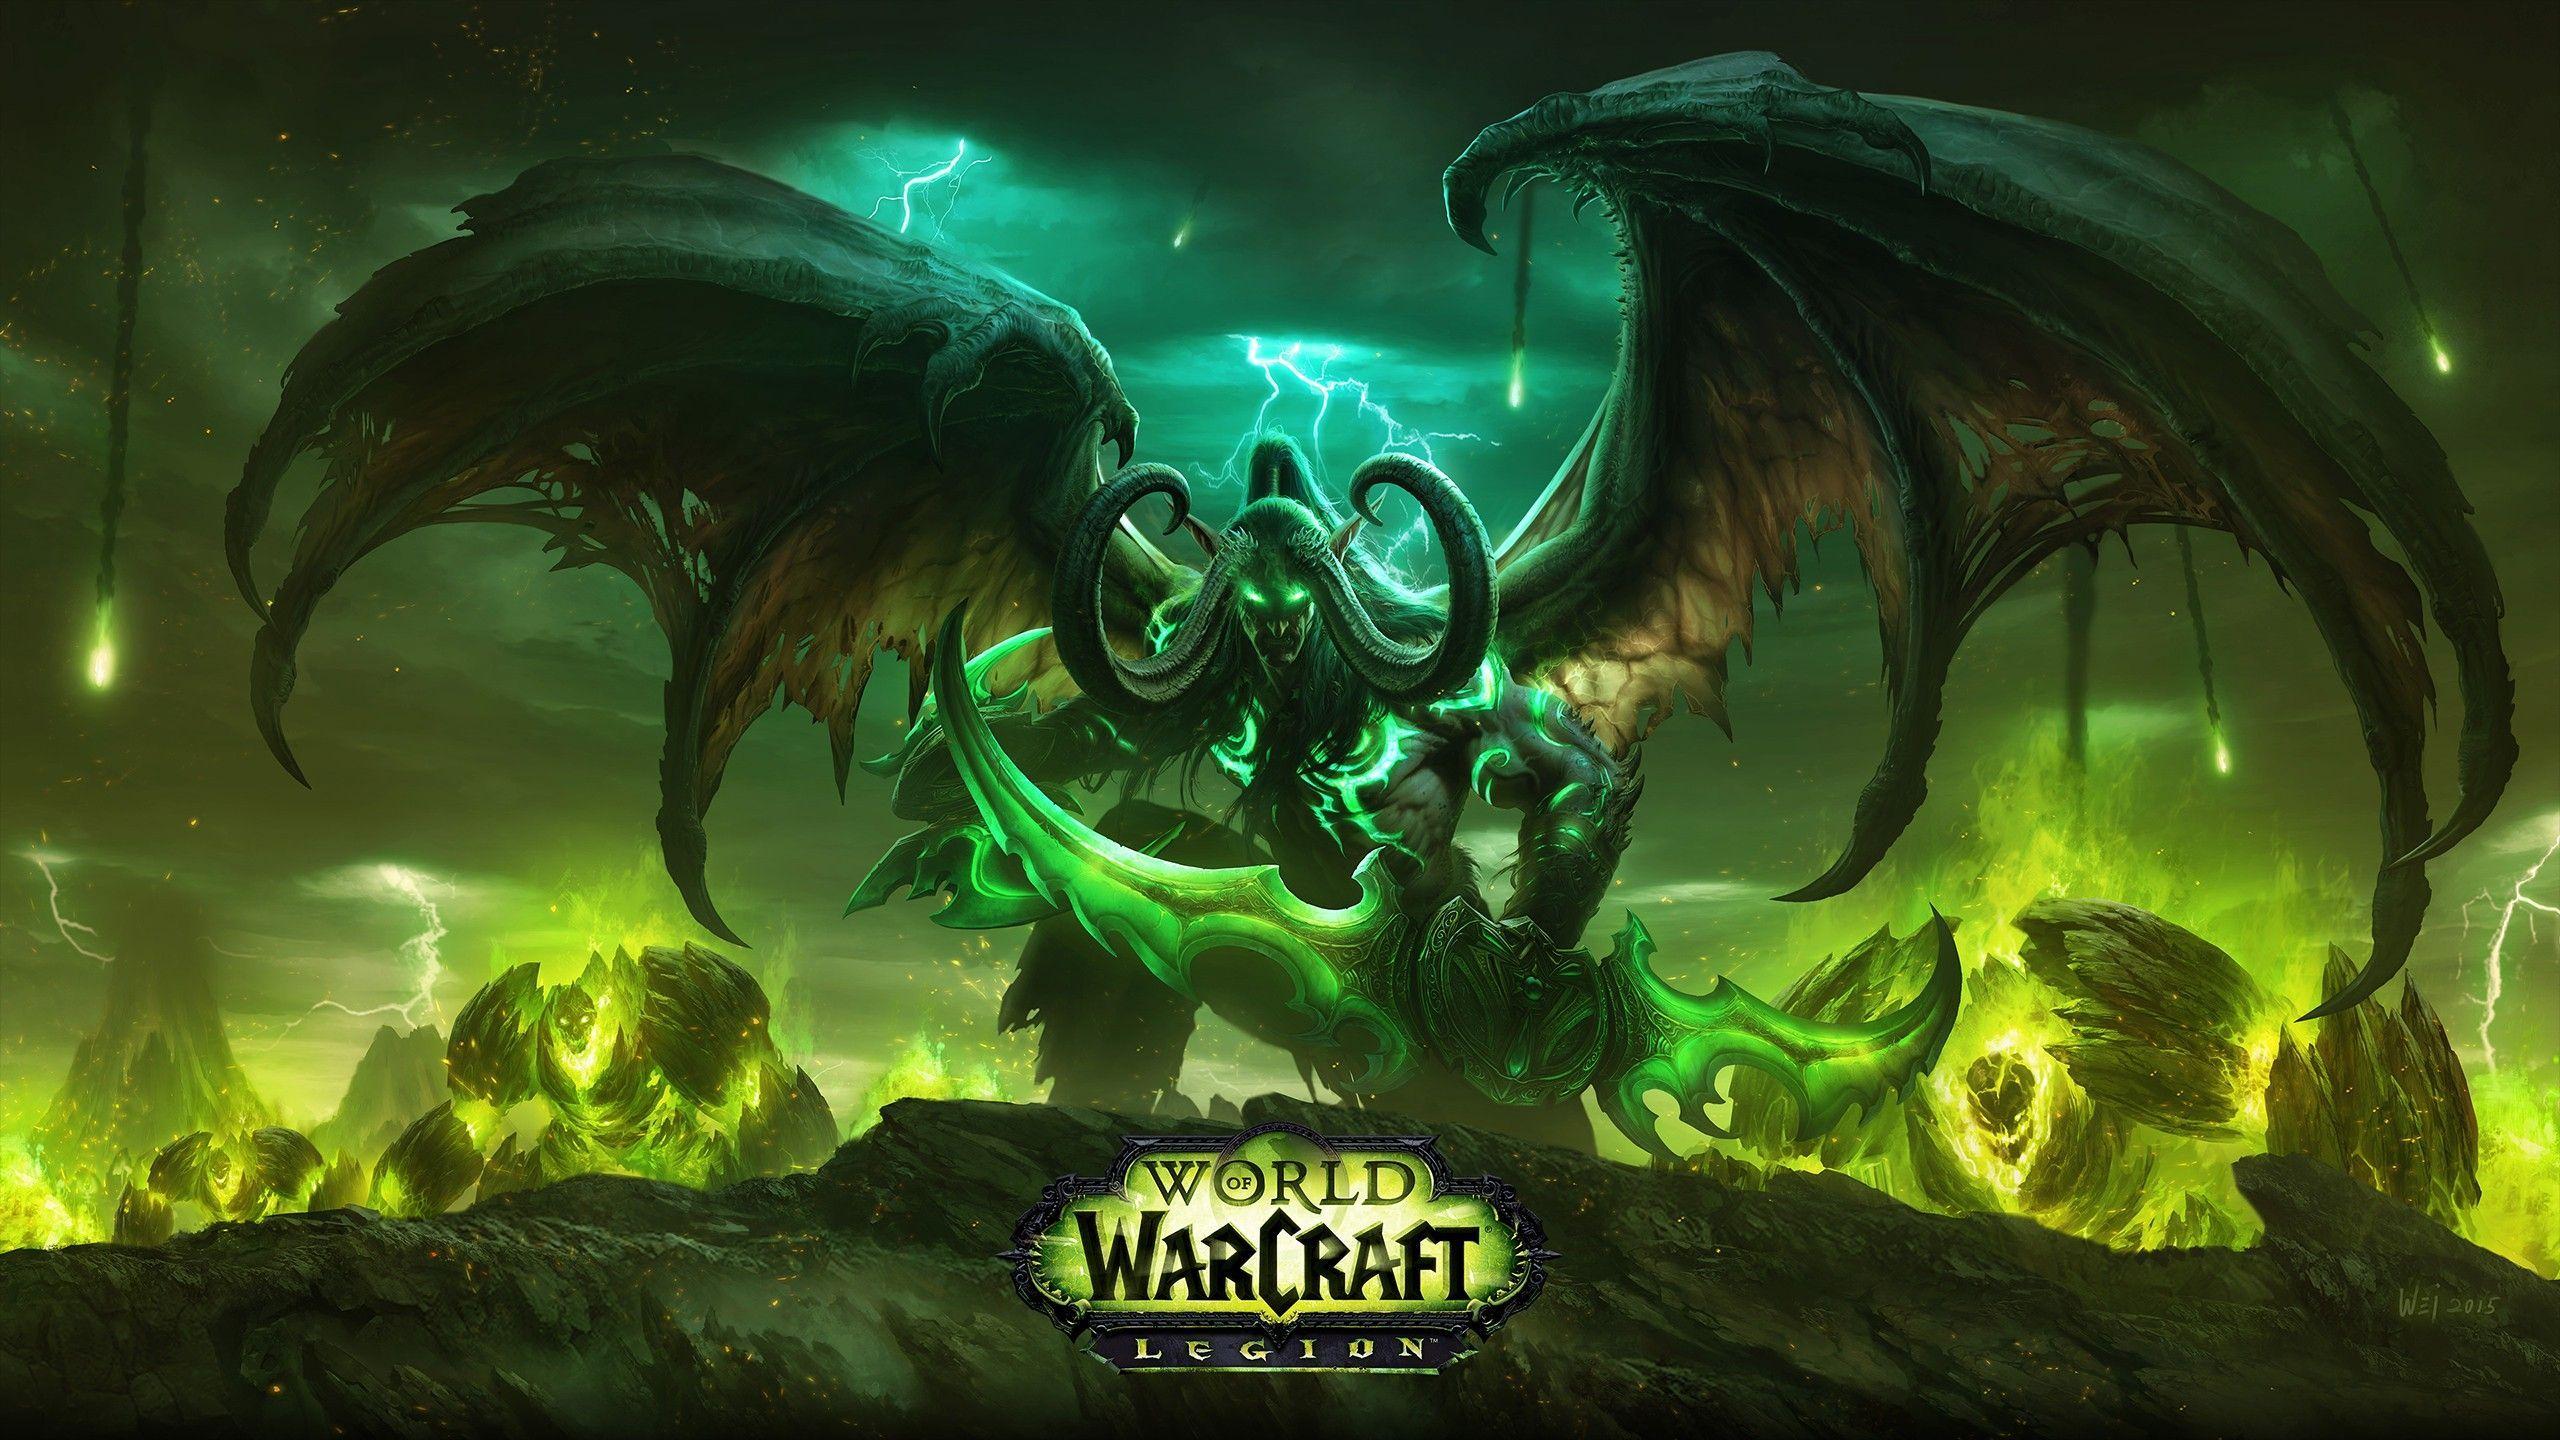 General 2560x1440 World of Warcraft: Legion. Wallpaper